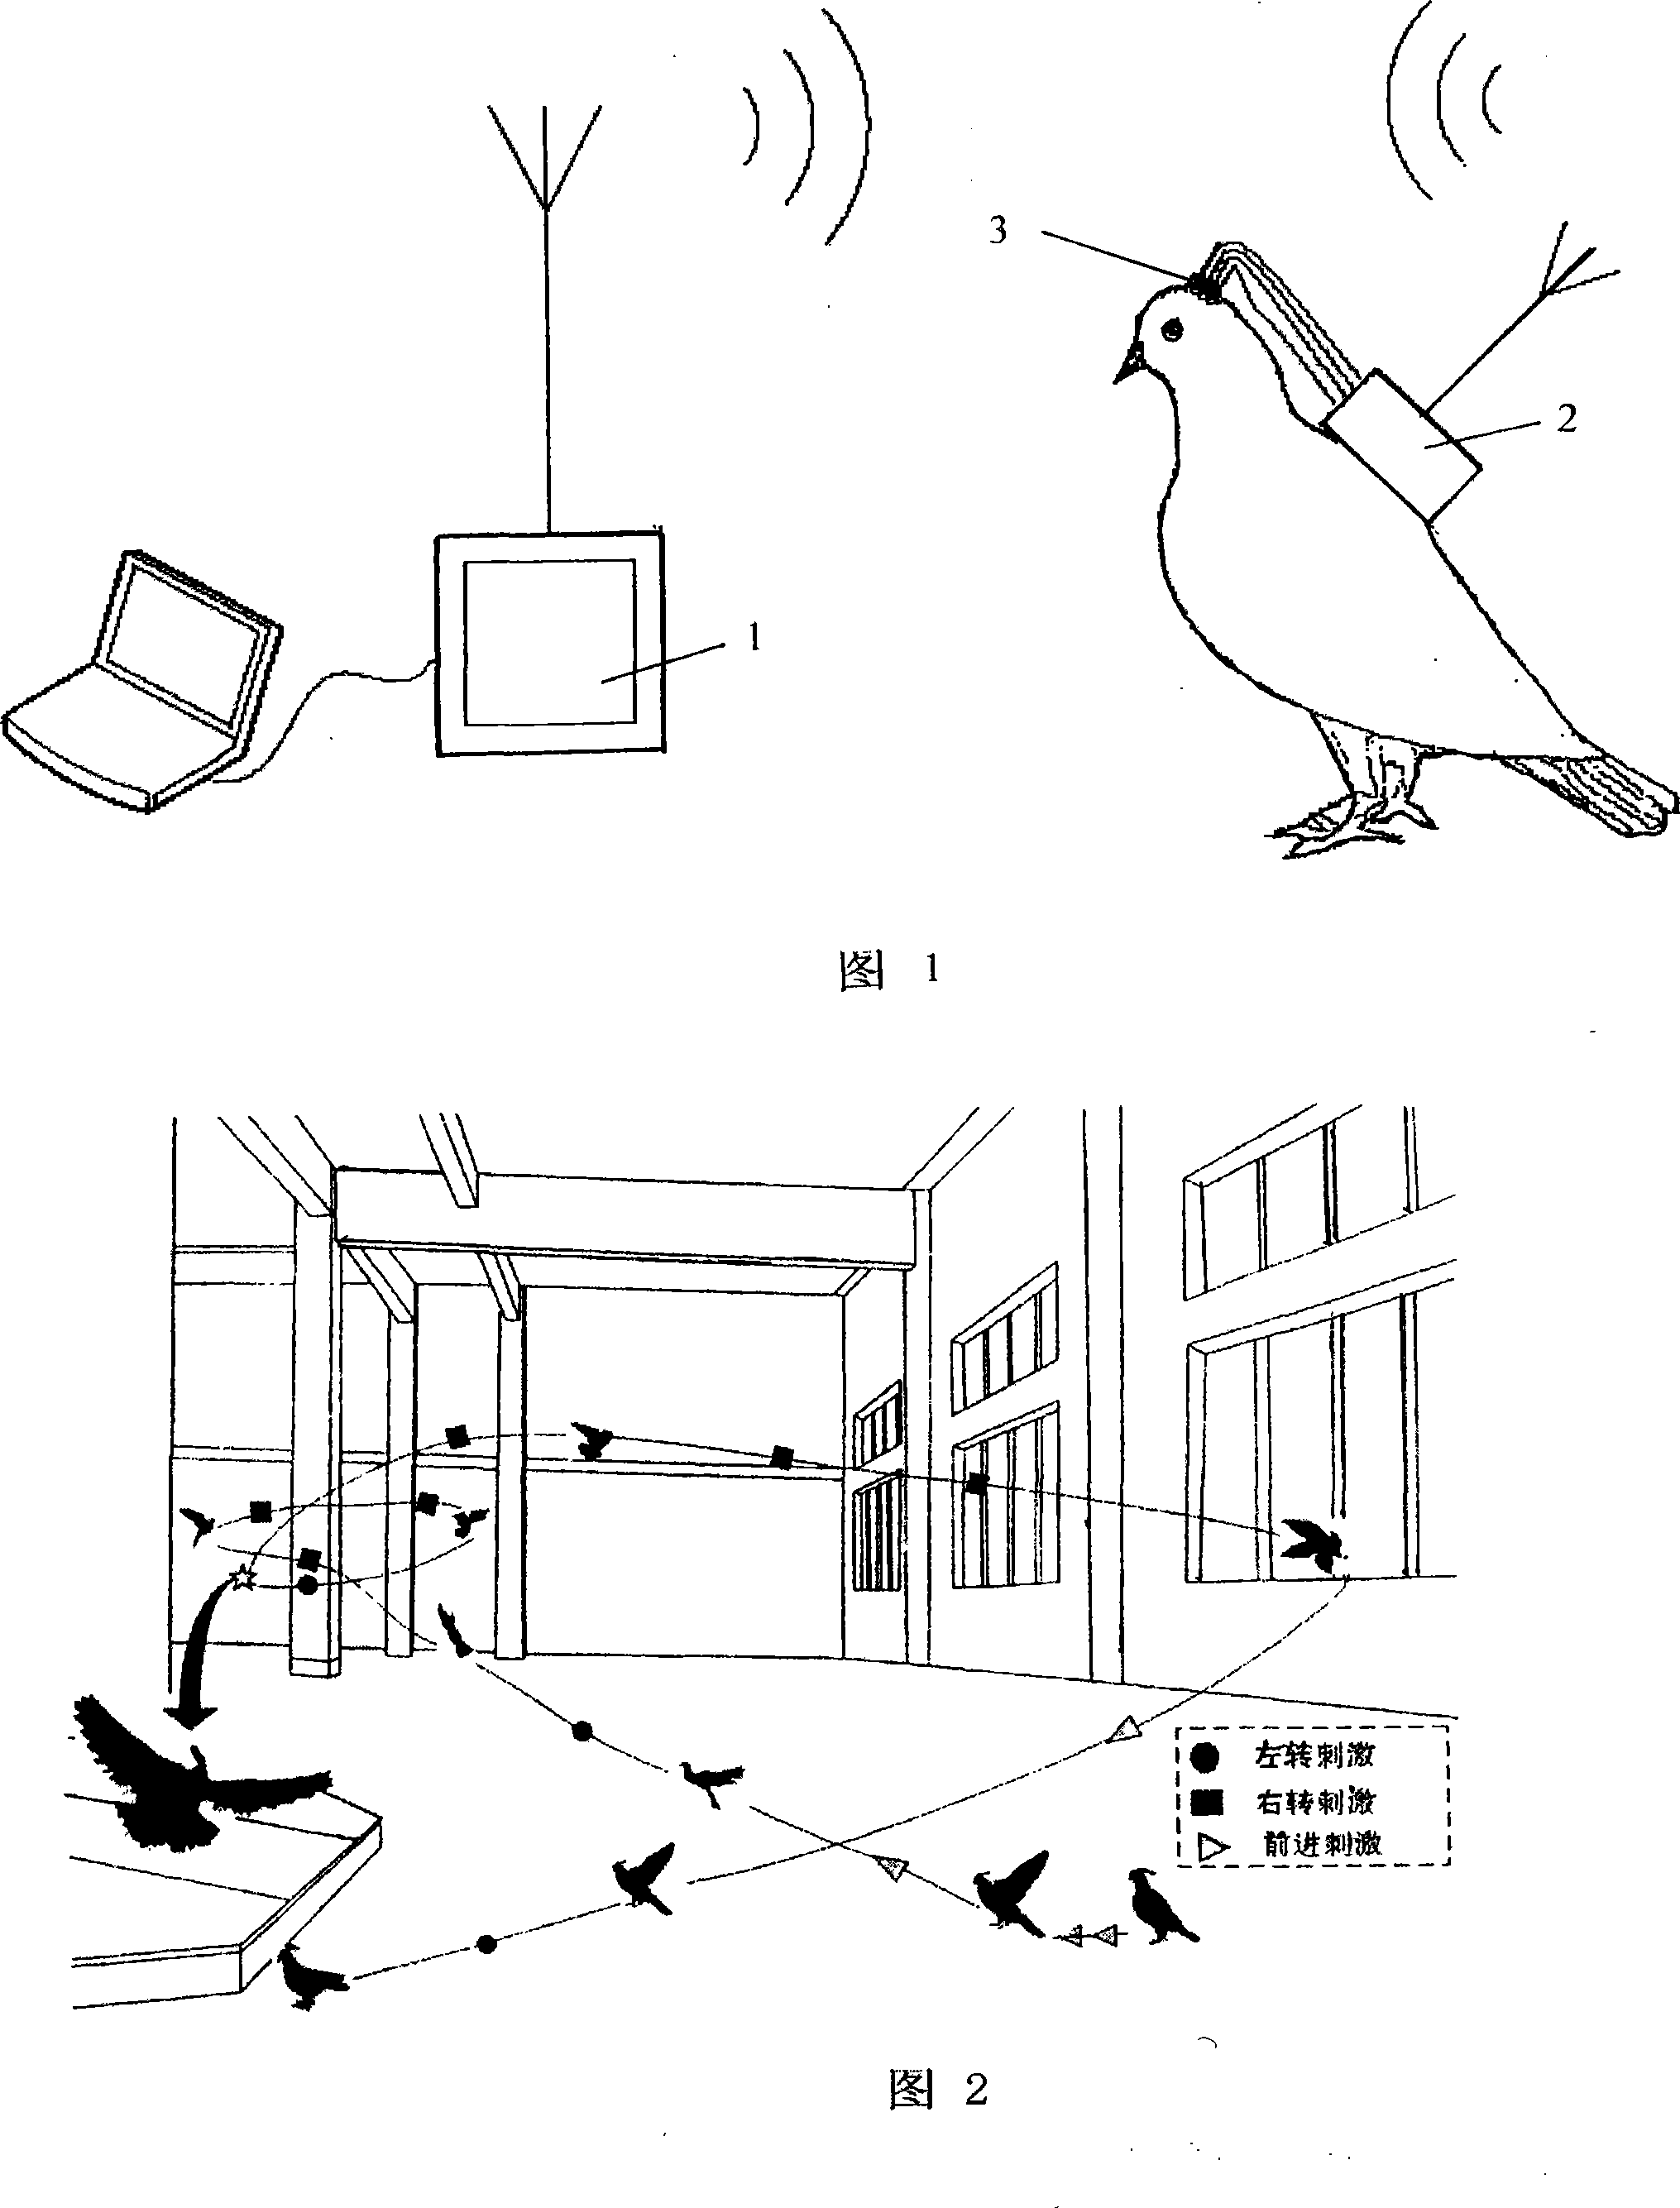 Aiming method for robot bird